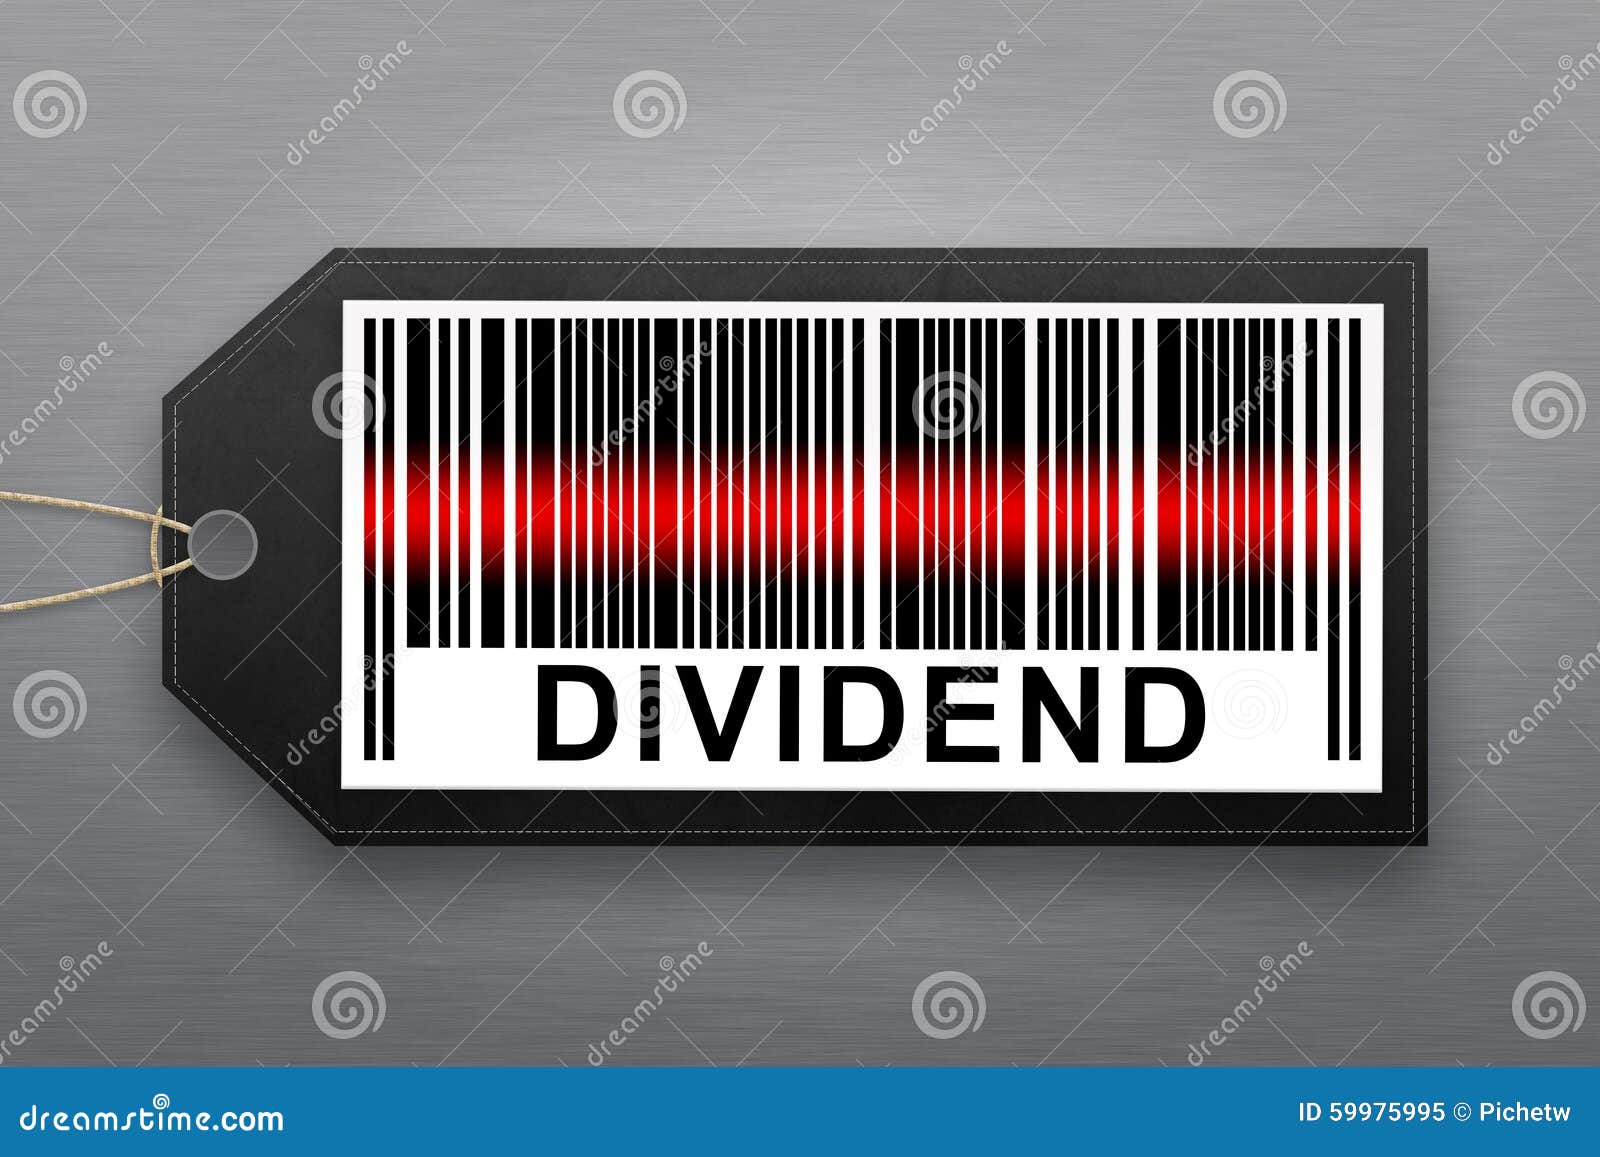 dividend barcode